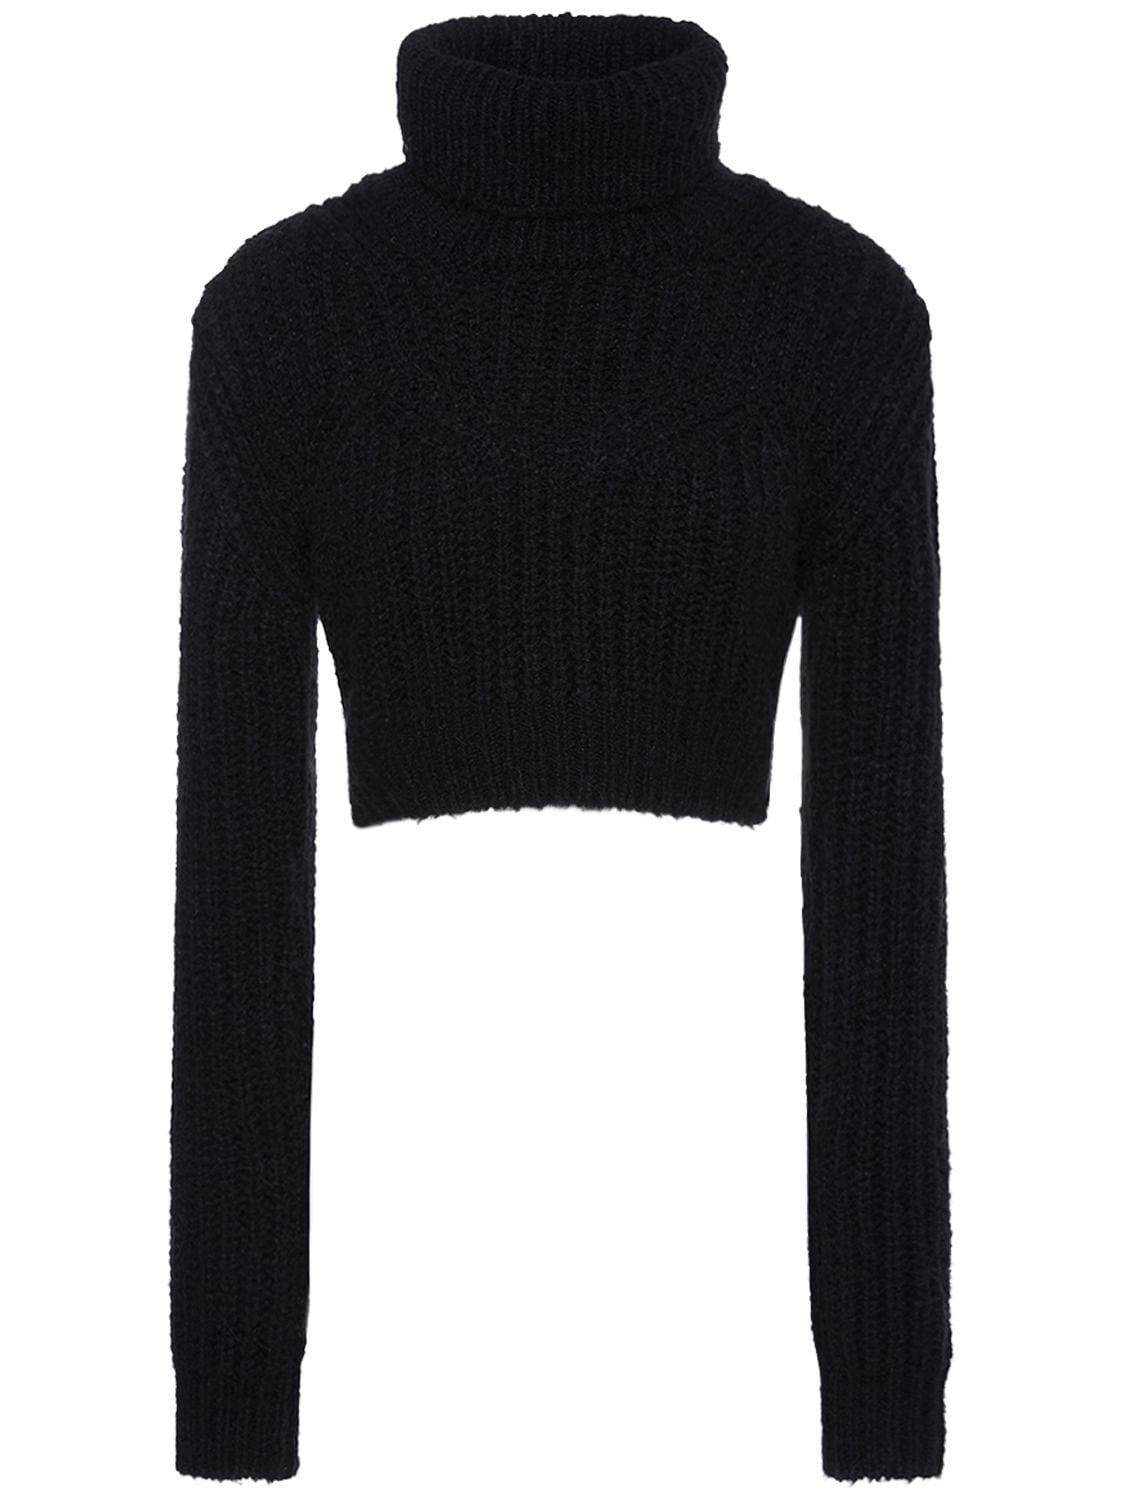 Image of Rib Knit Alpaca Crop Turtleneck Sweater